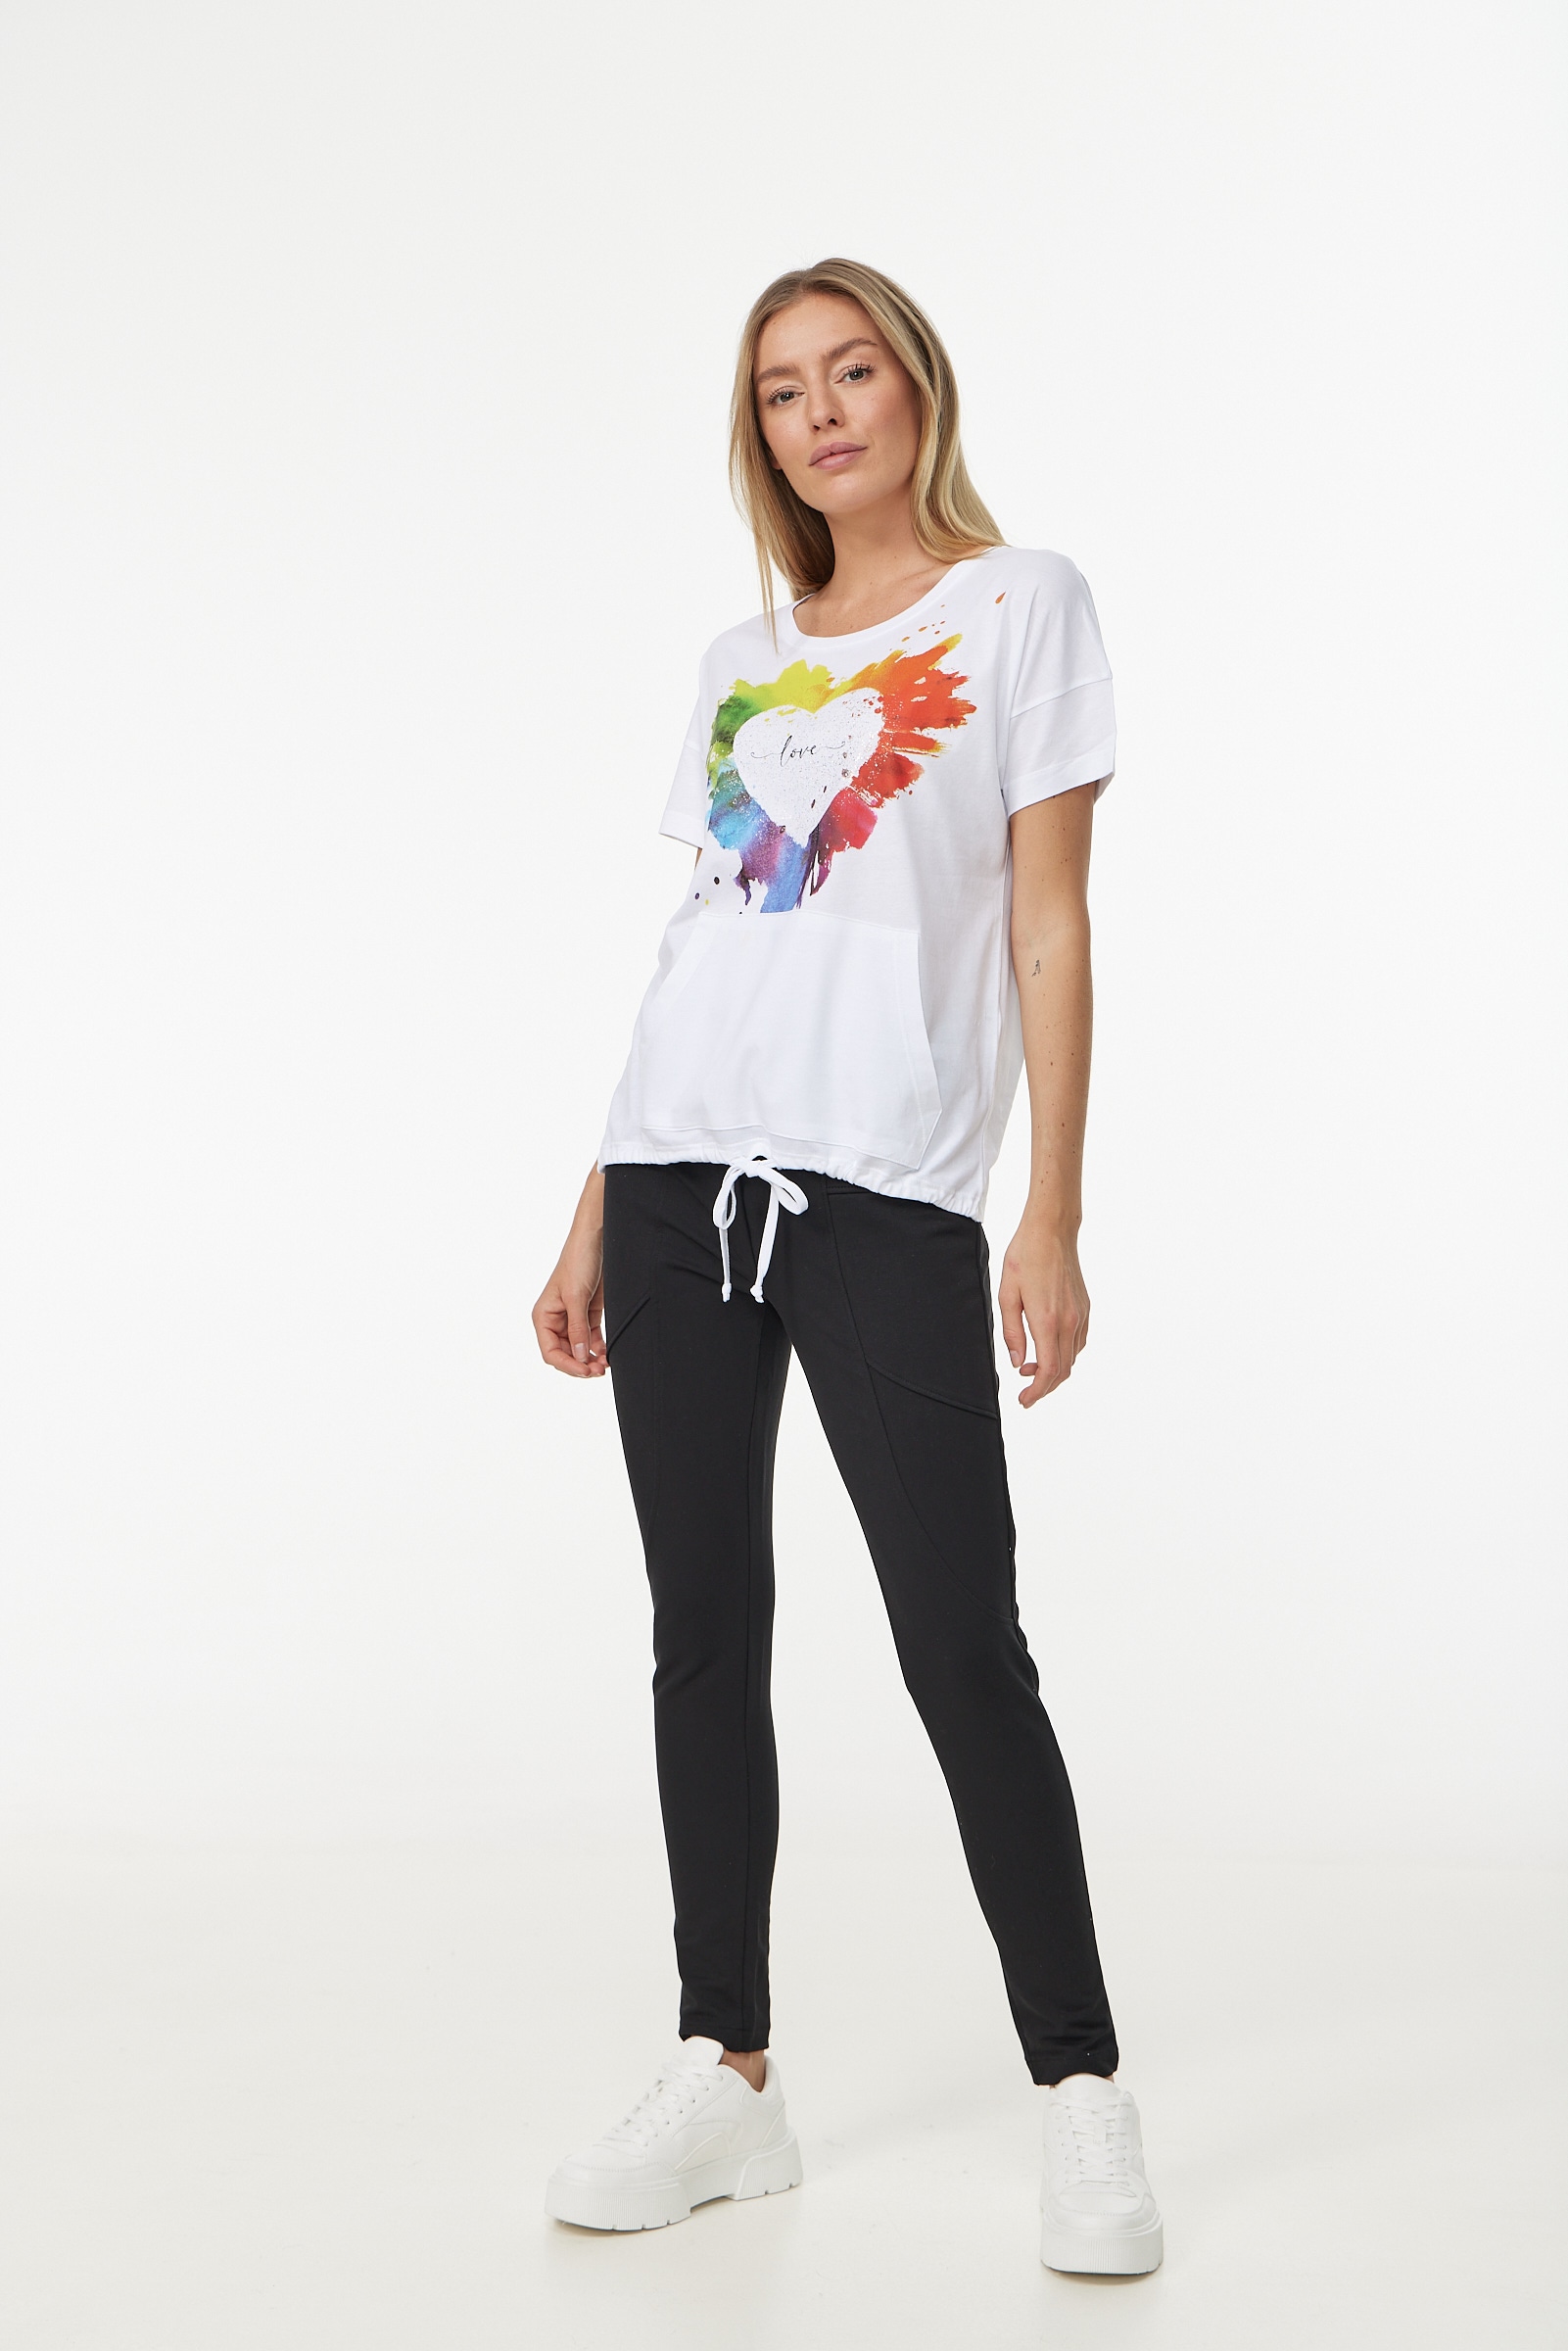 BAUR mit farbenfrohem bestellen Frontprint T-Shirt, Decay |